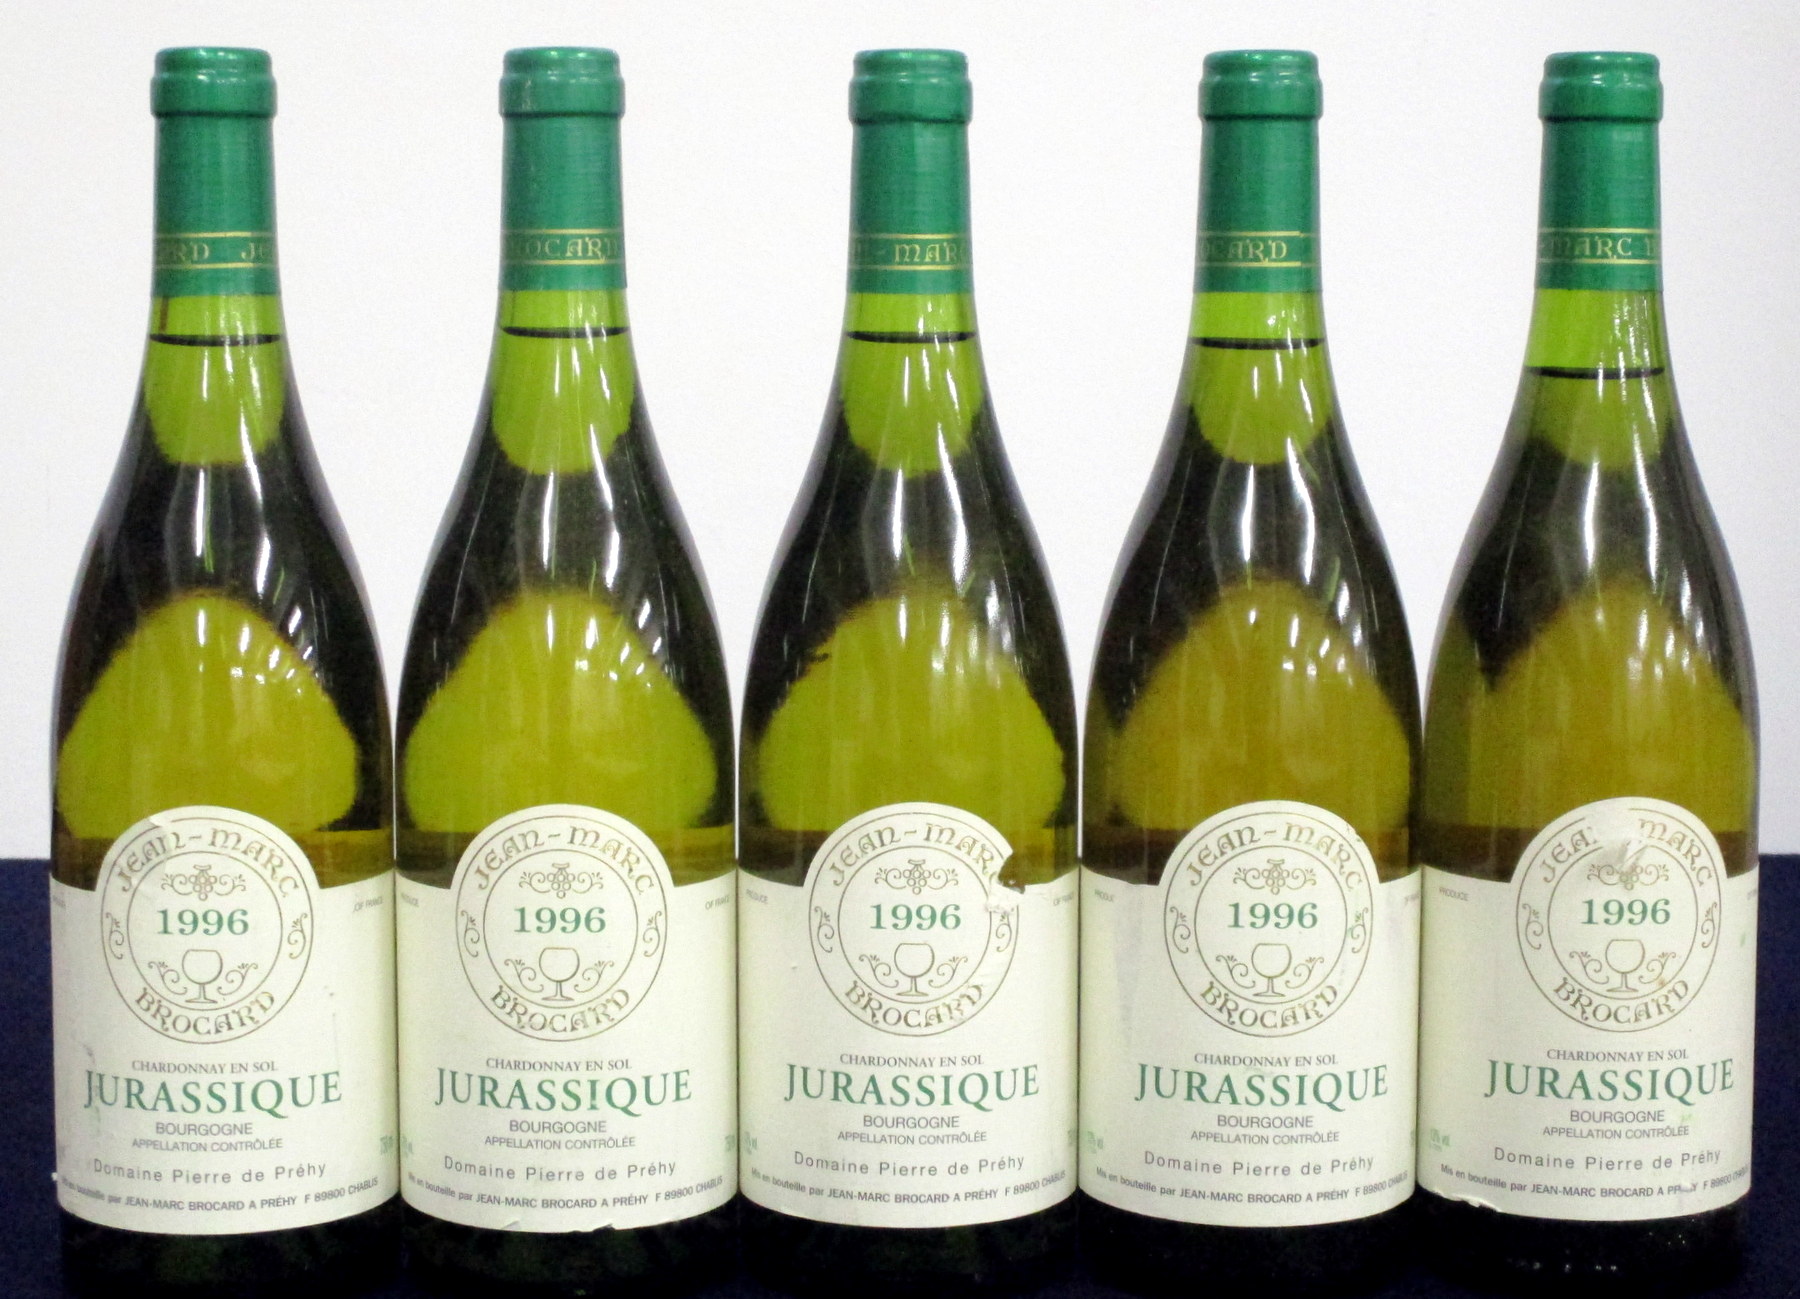 5 bts Chardonnay En Sol Jurassique Bourgogne 1996 Jean Marc Brocard Dom Pierre de Prény 4 i.n, 1